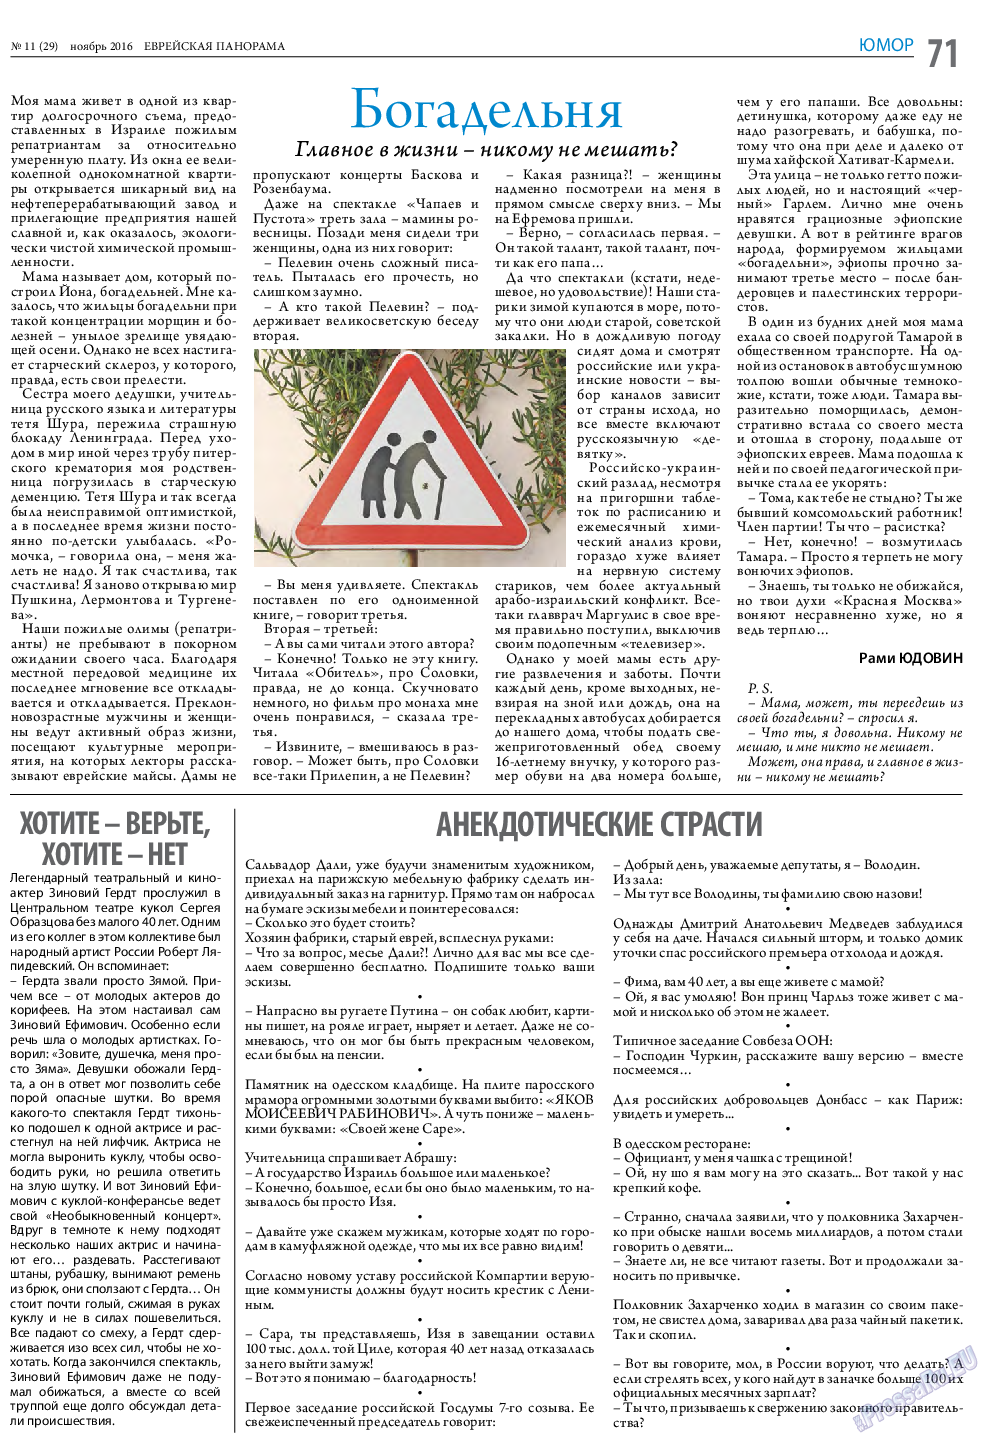 Еврейская панорама, газета. 2016 №11 стр.71